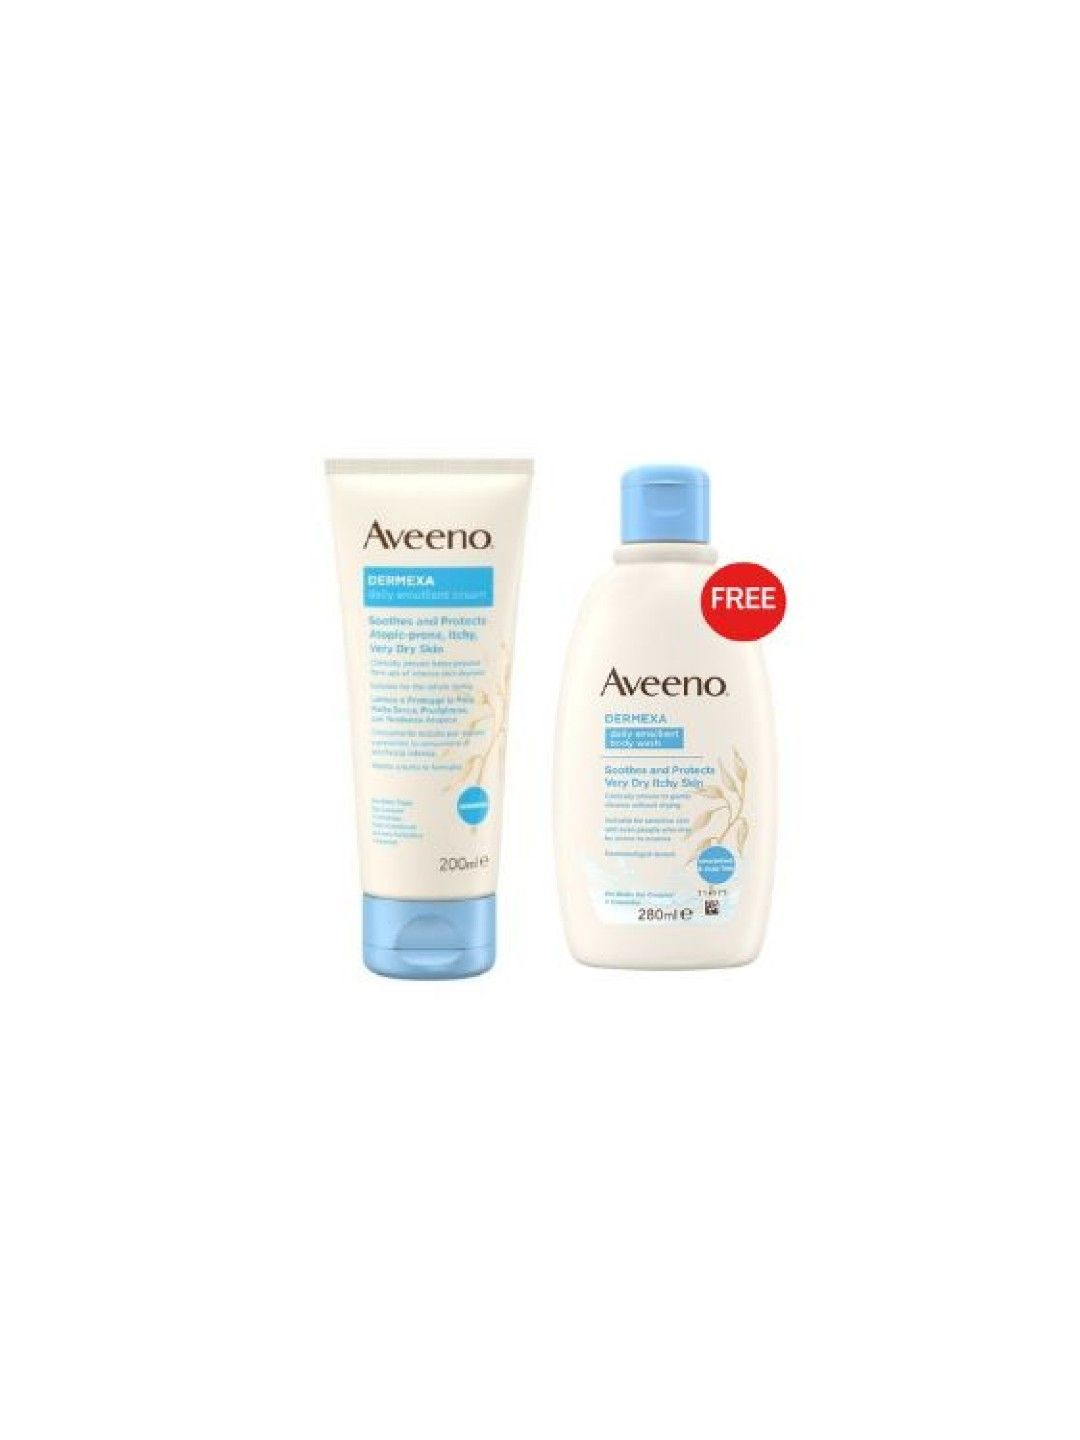 Buy Aveeno Dermexa Emollient Cream 200ml + Emollient Body Wash